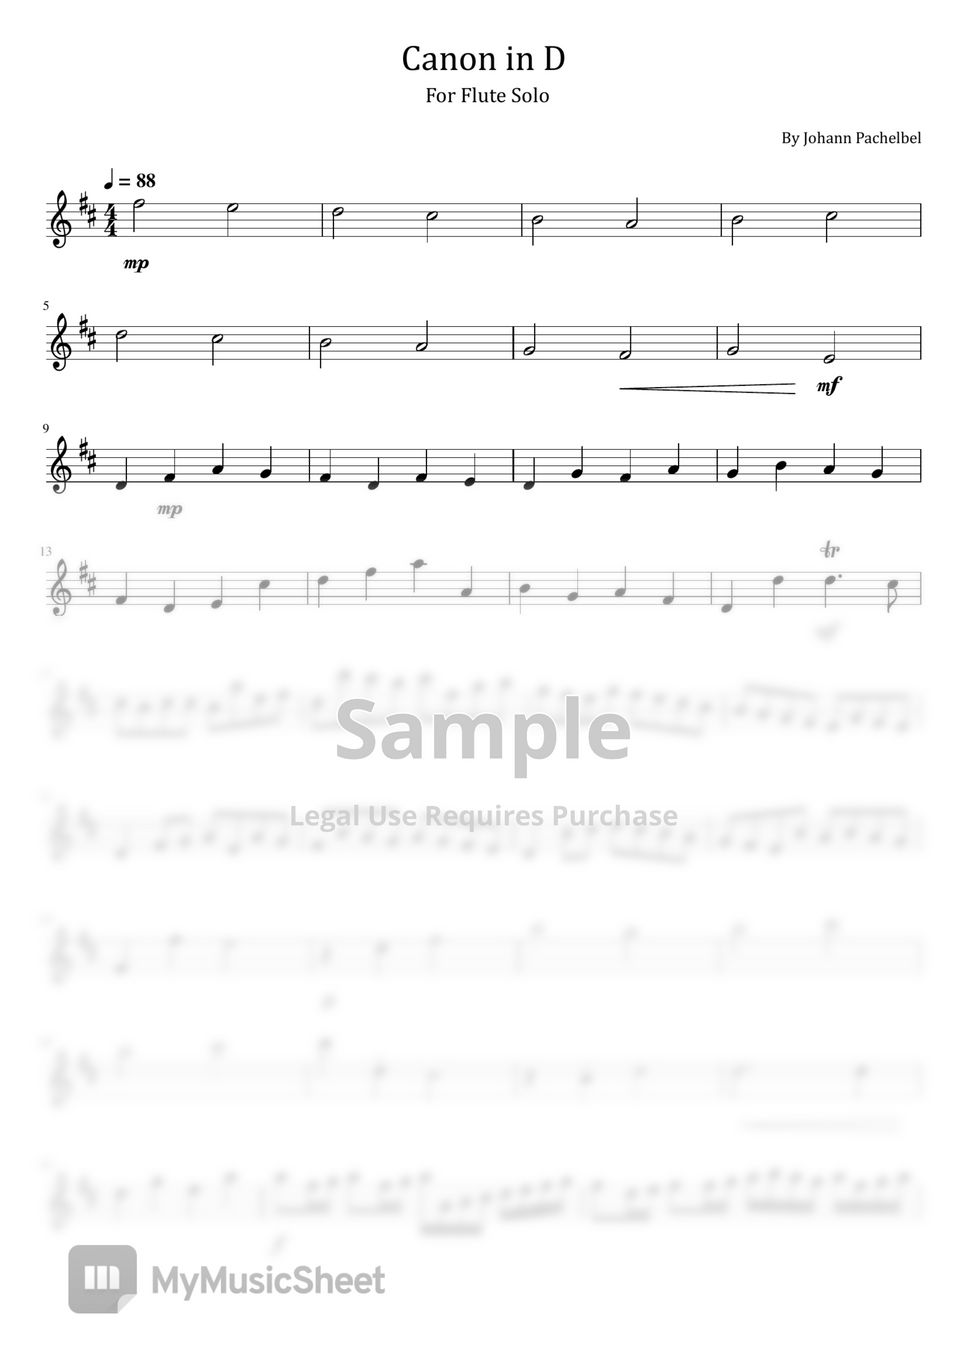 Johann Pachelbel - Canon in D (For Flute Solo) by poon